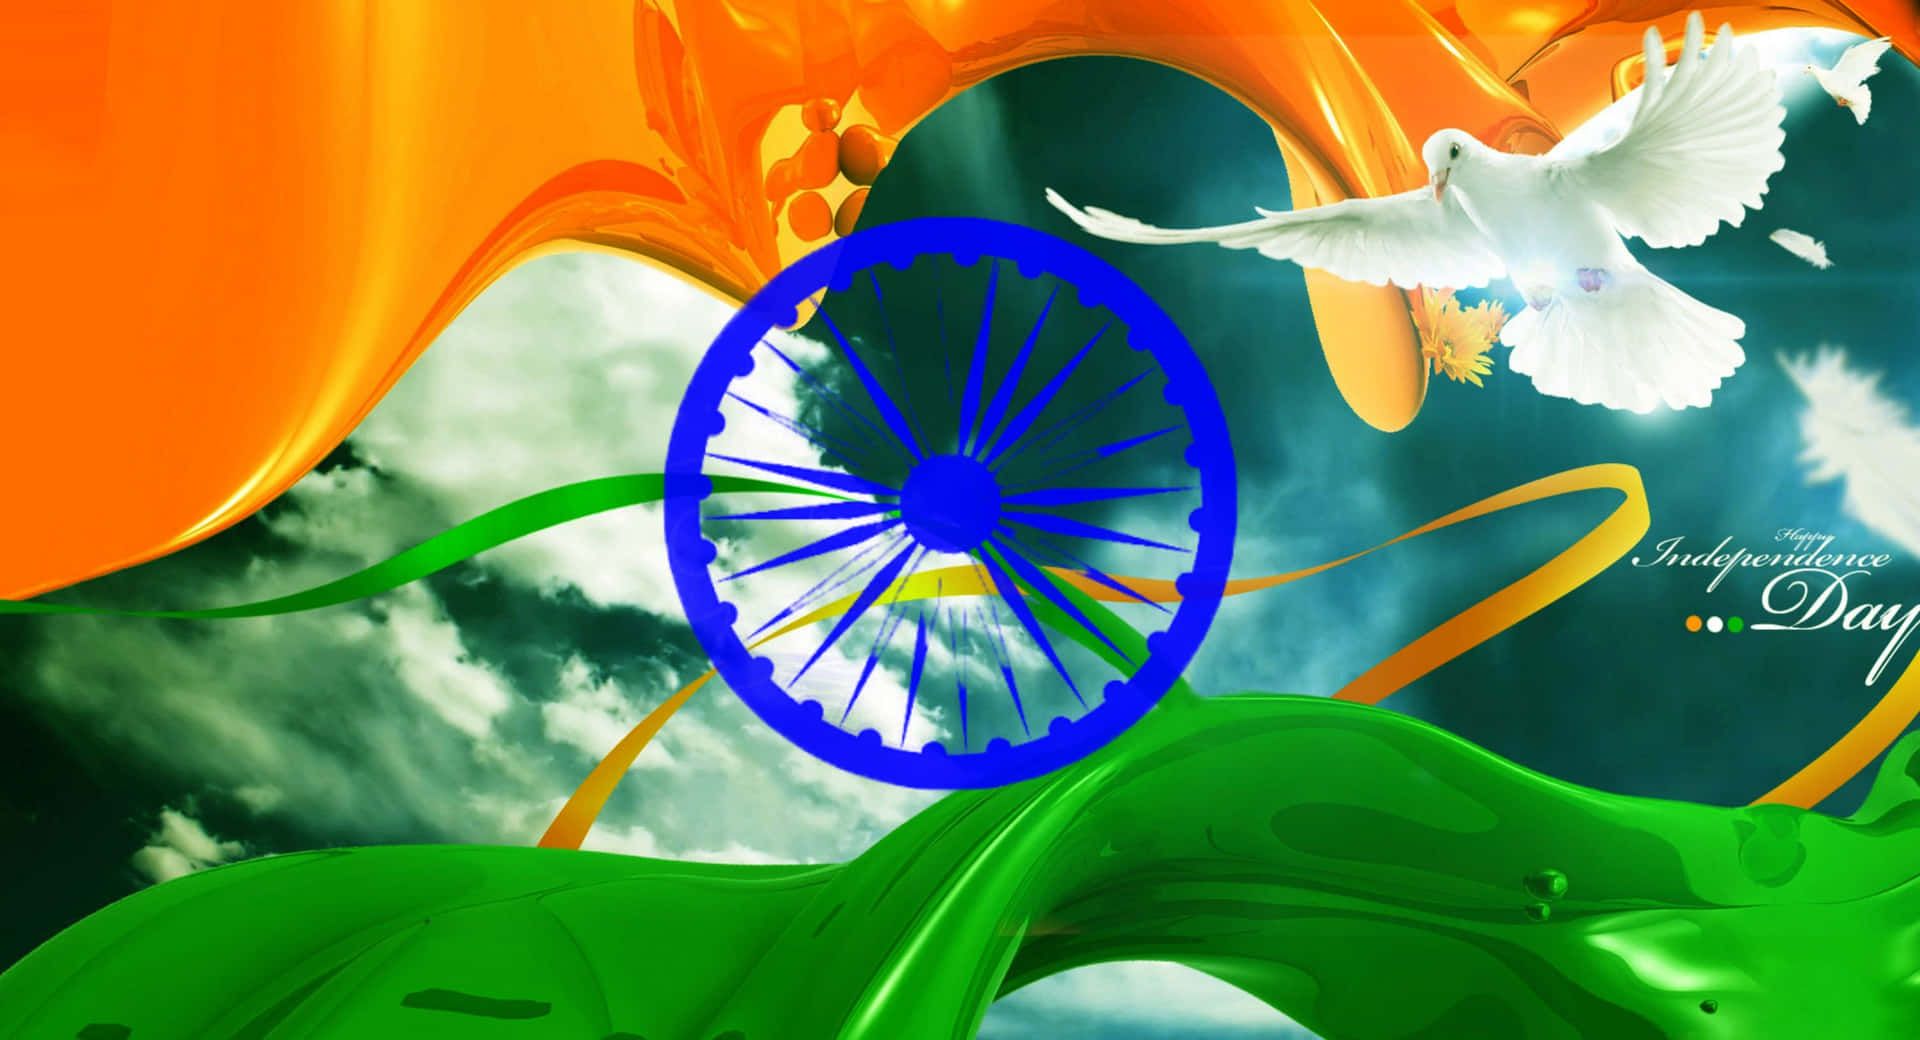 Celebrating the Liberty - India Independence Day